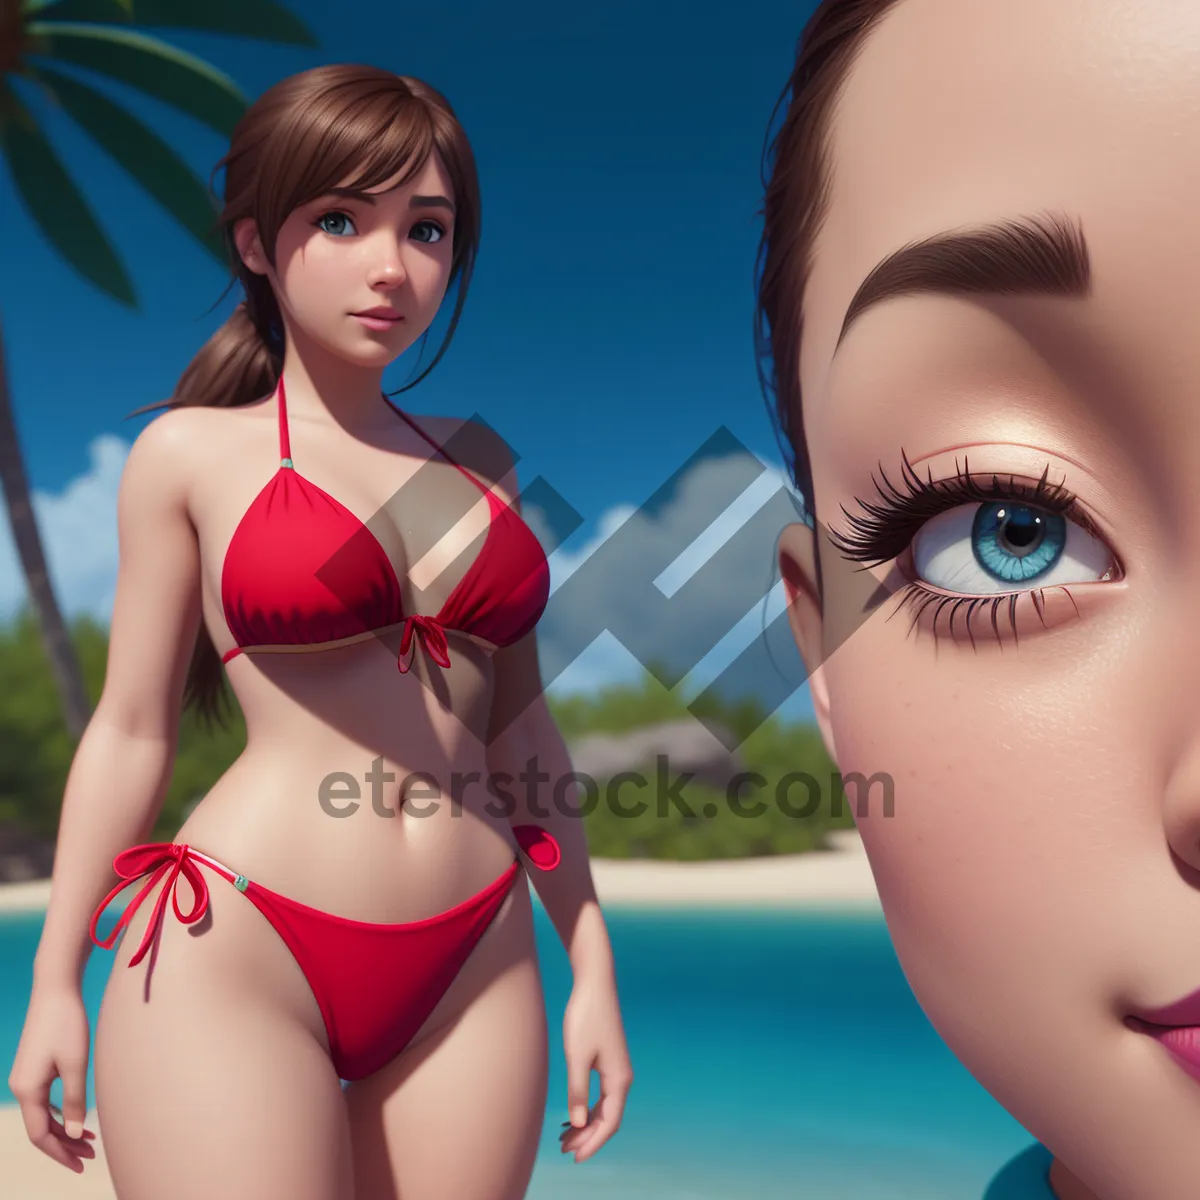 Picture of Seductive Beachwear: Slim Bikini Model Poses on Beach